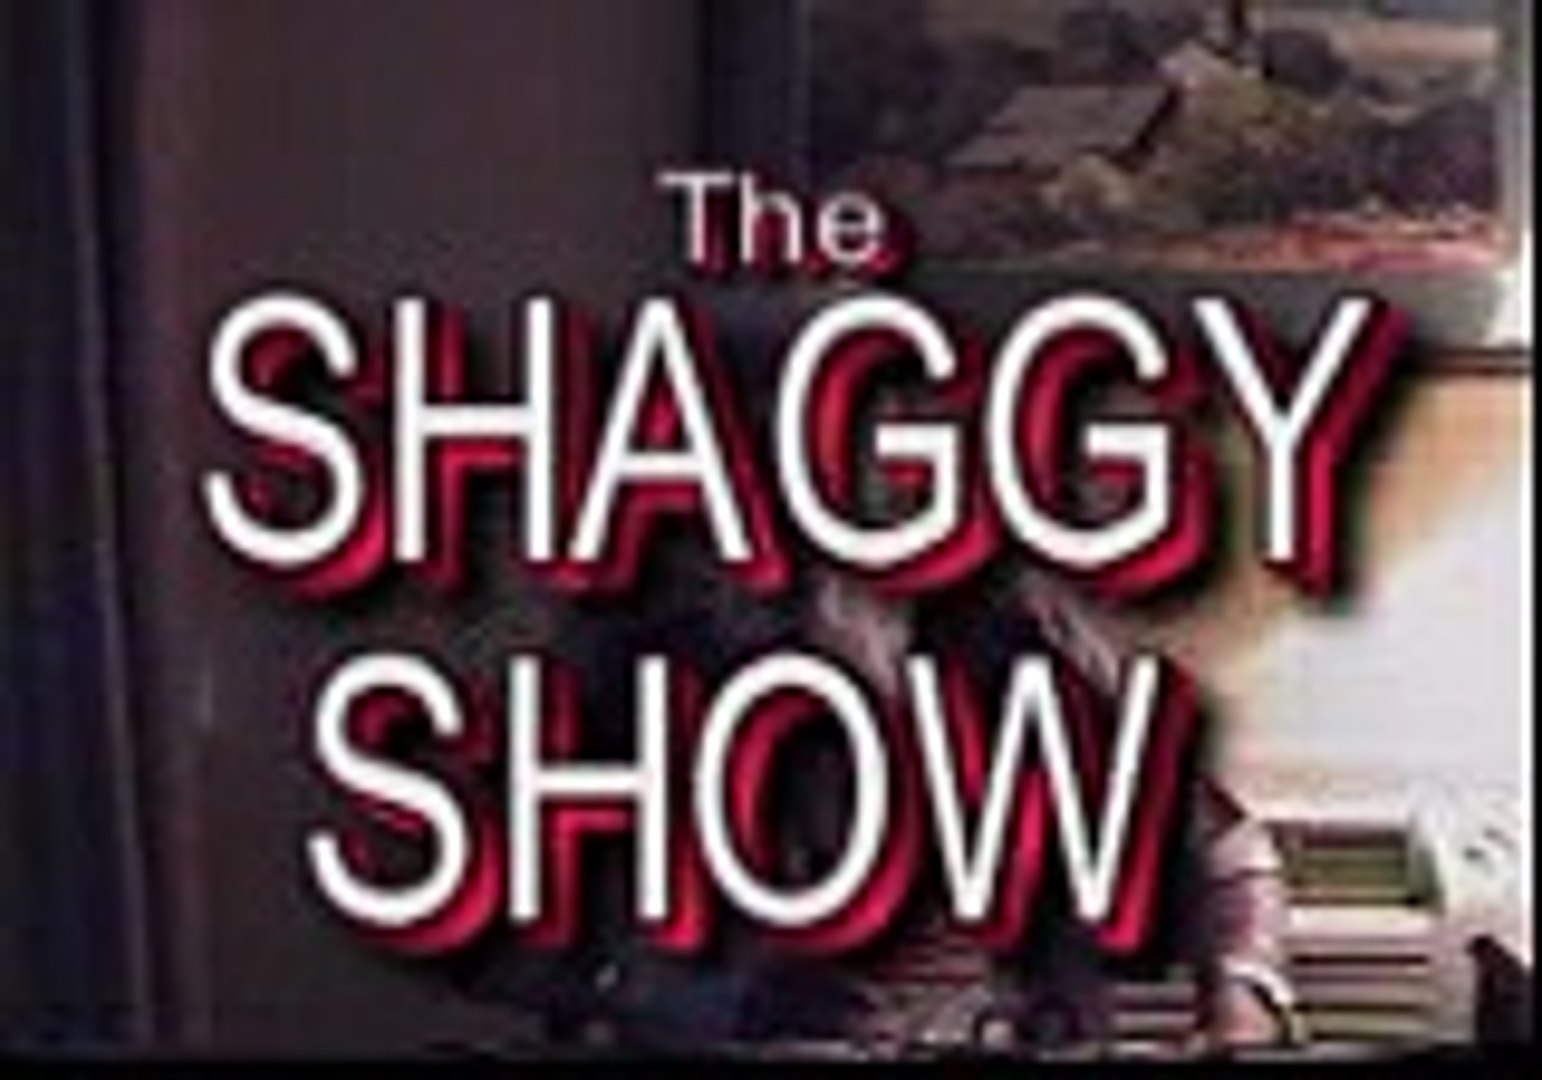 Insane Clown Posse - The Shaggy Show episode 13